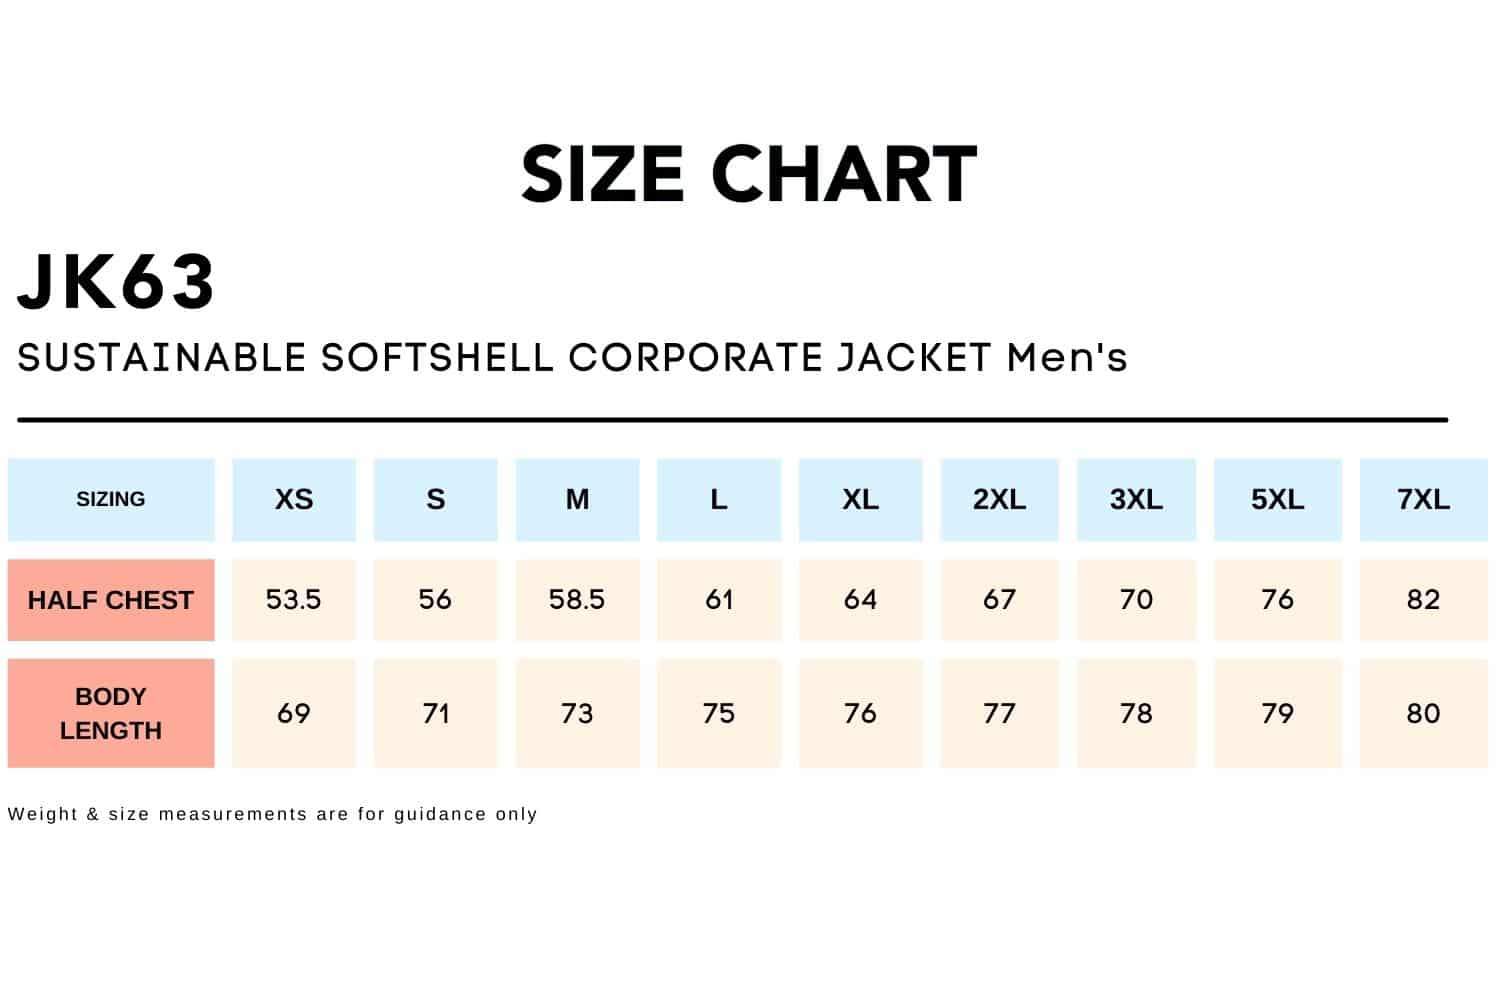 Size Chart_JK63 SUSTAINABLE SOFTSHELL CORPORATE JACKET Men's